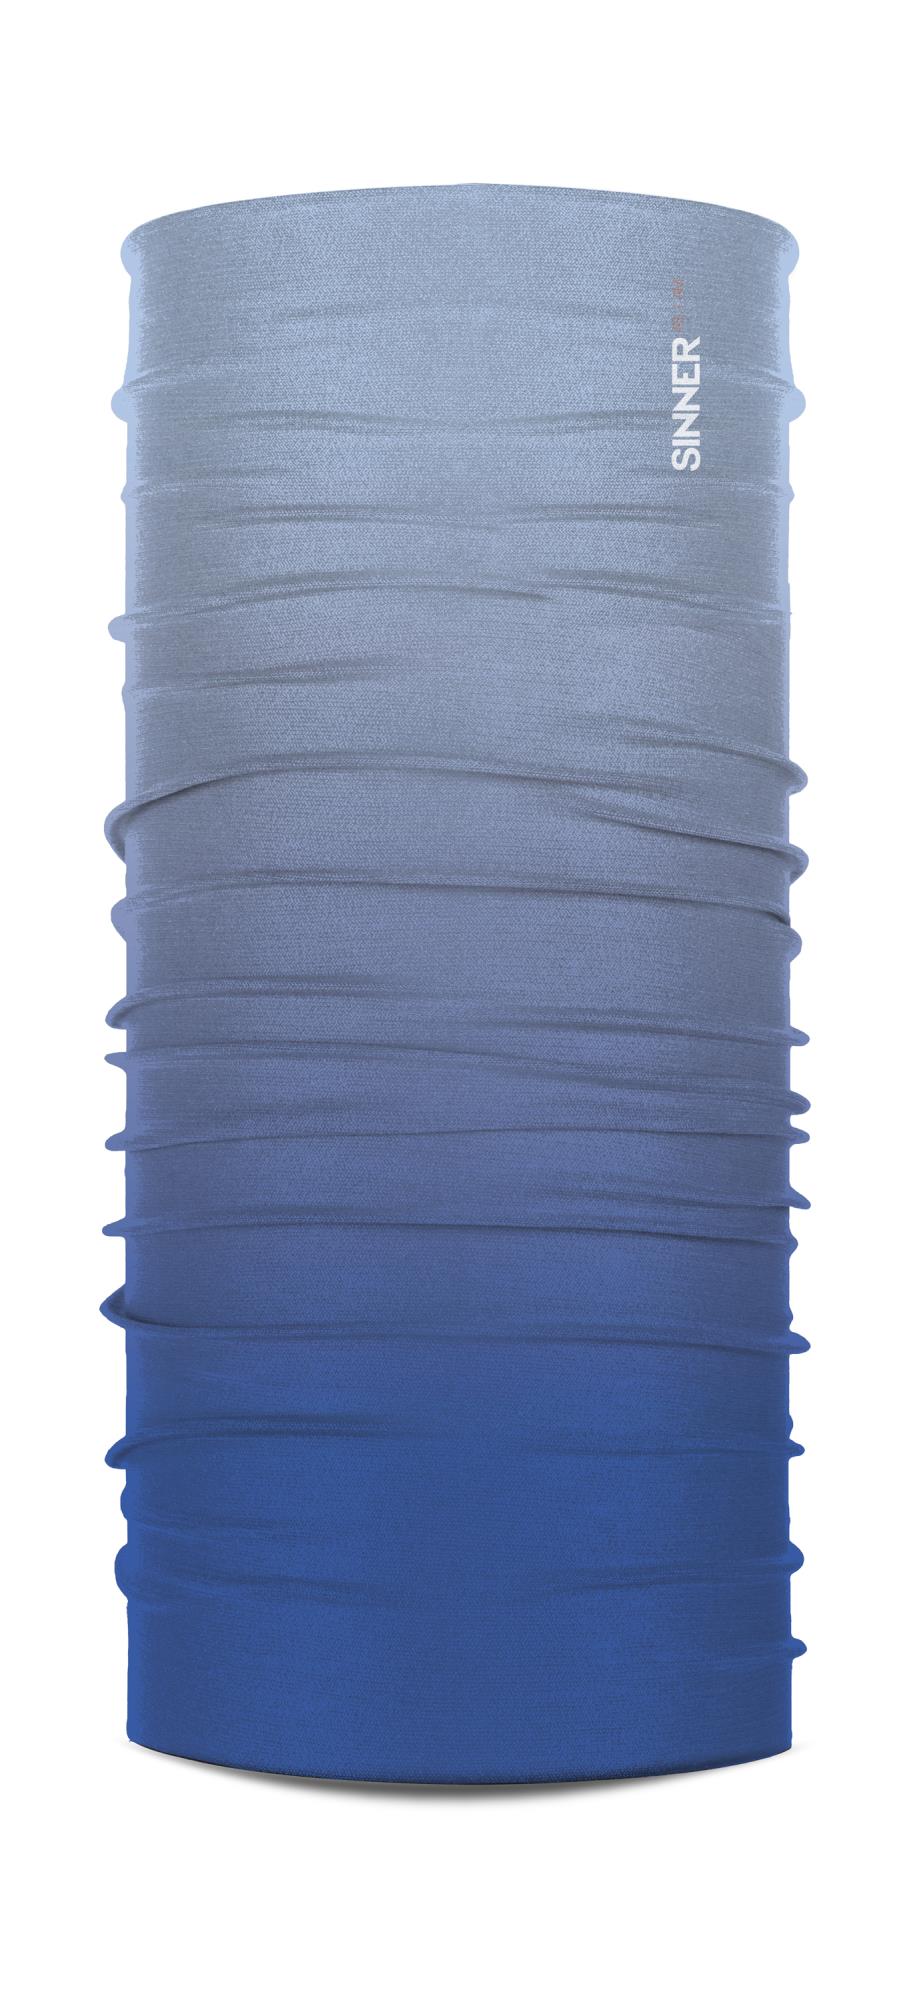 SIWE-658-50-00 nedy blue gradient